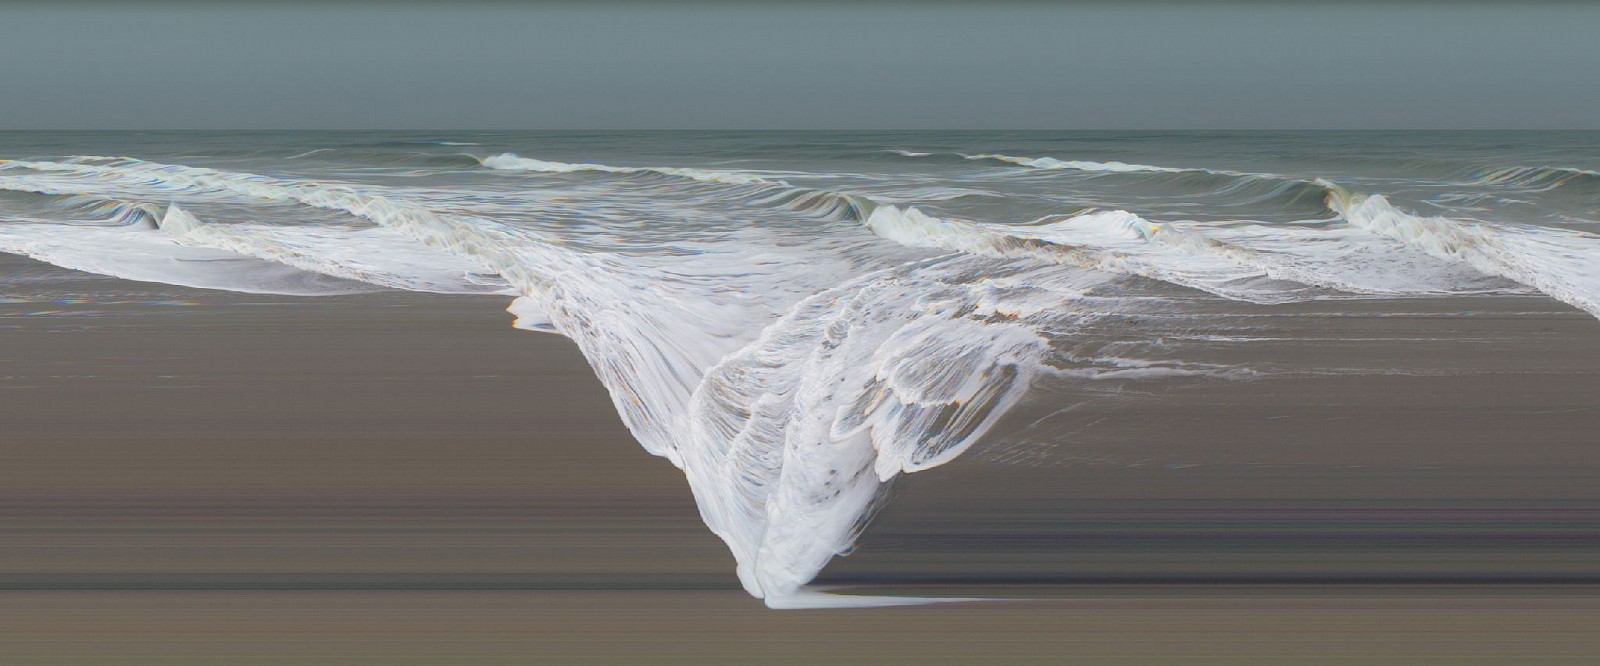 Jay Mark Johnson, STORM AT SEA #5D, 2010 Malibu - Ventura CA
archival pigment on paper, mounted on aluminum, 40 x 96 in. (101.6 x 243.8 cm)